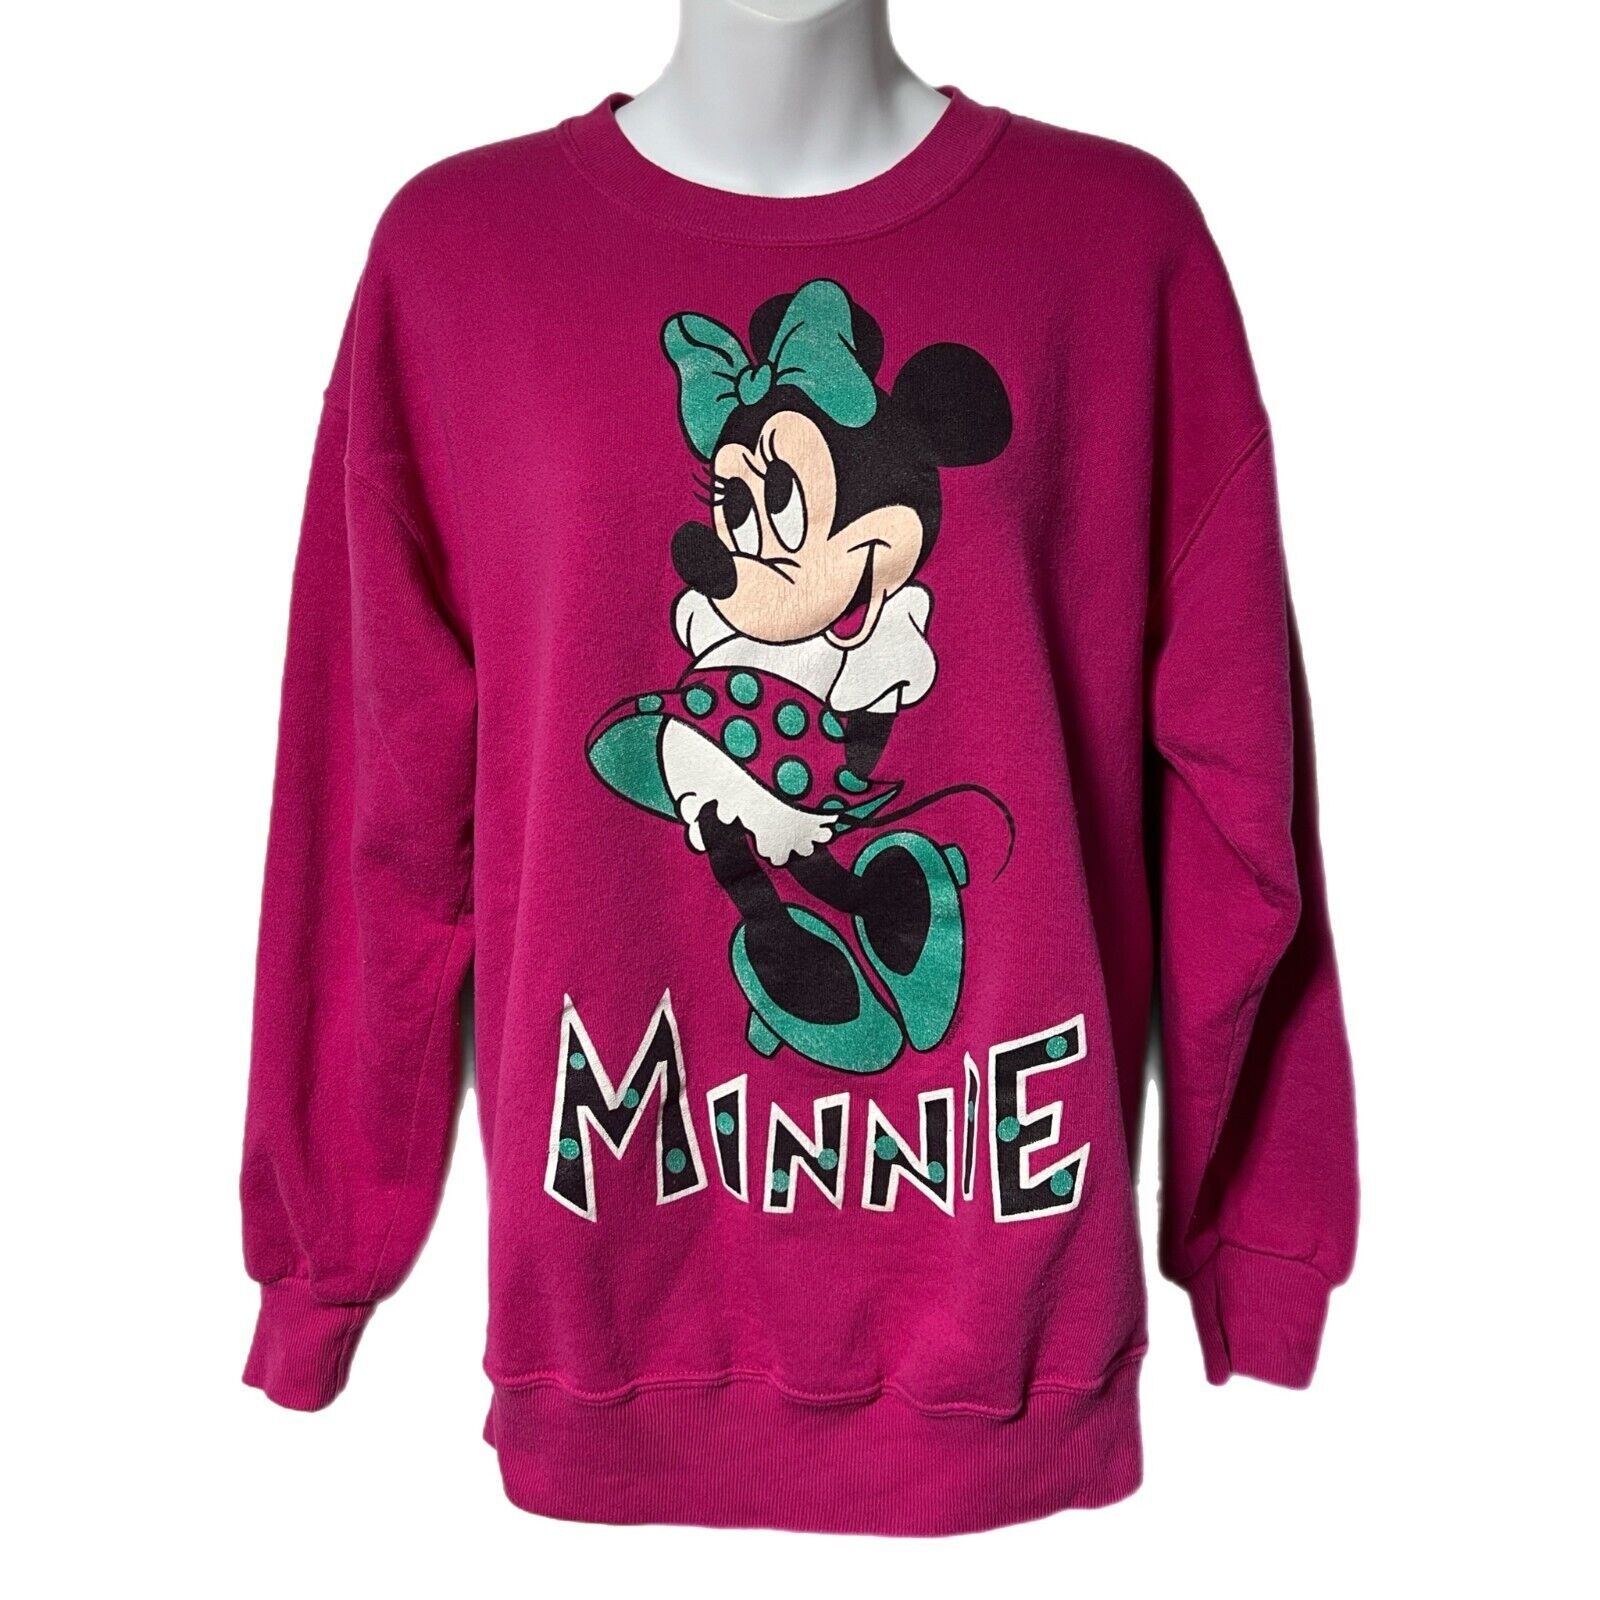 Vintage Minnie Mouse Disney Pink Crewneck Sweatshirt L Made in USA